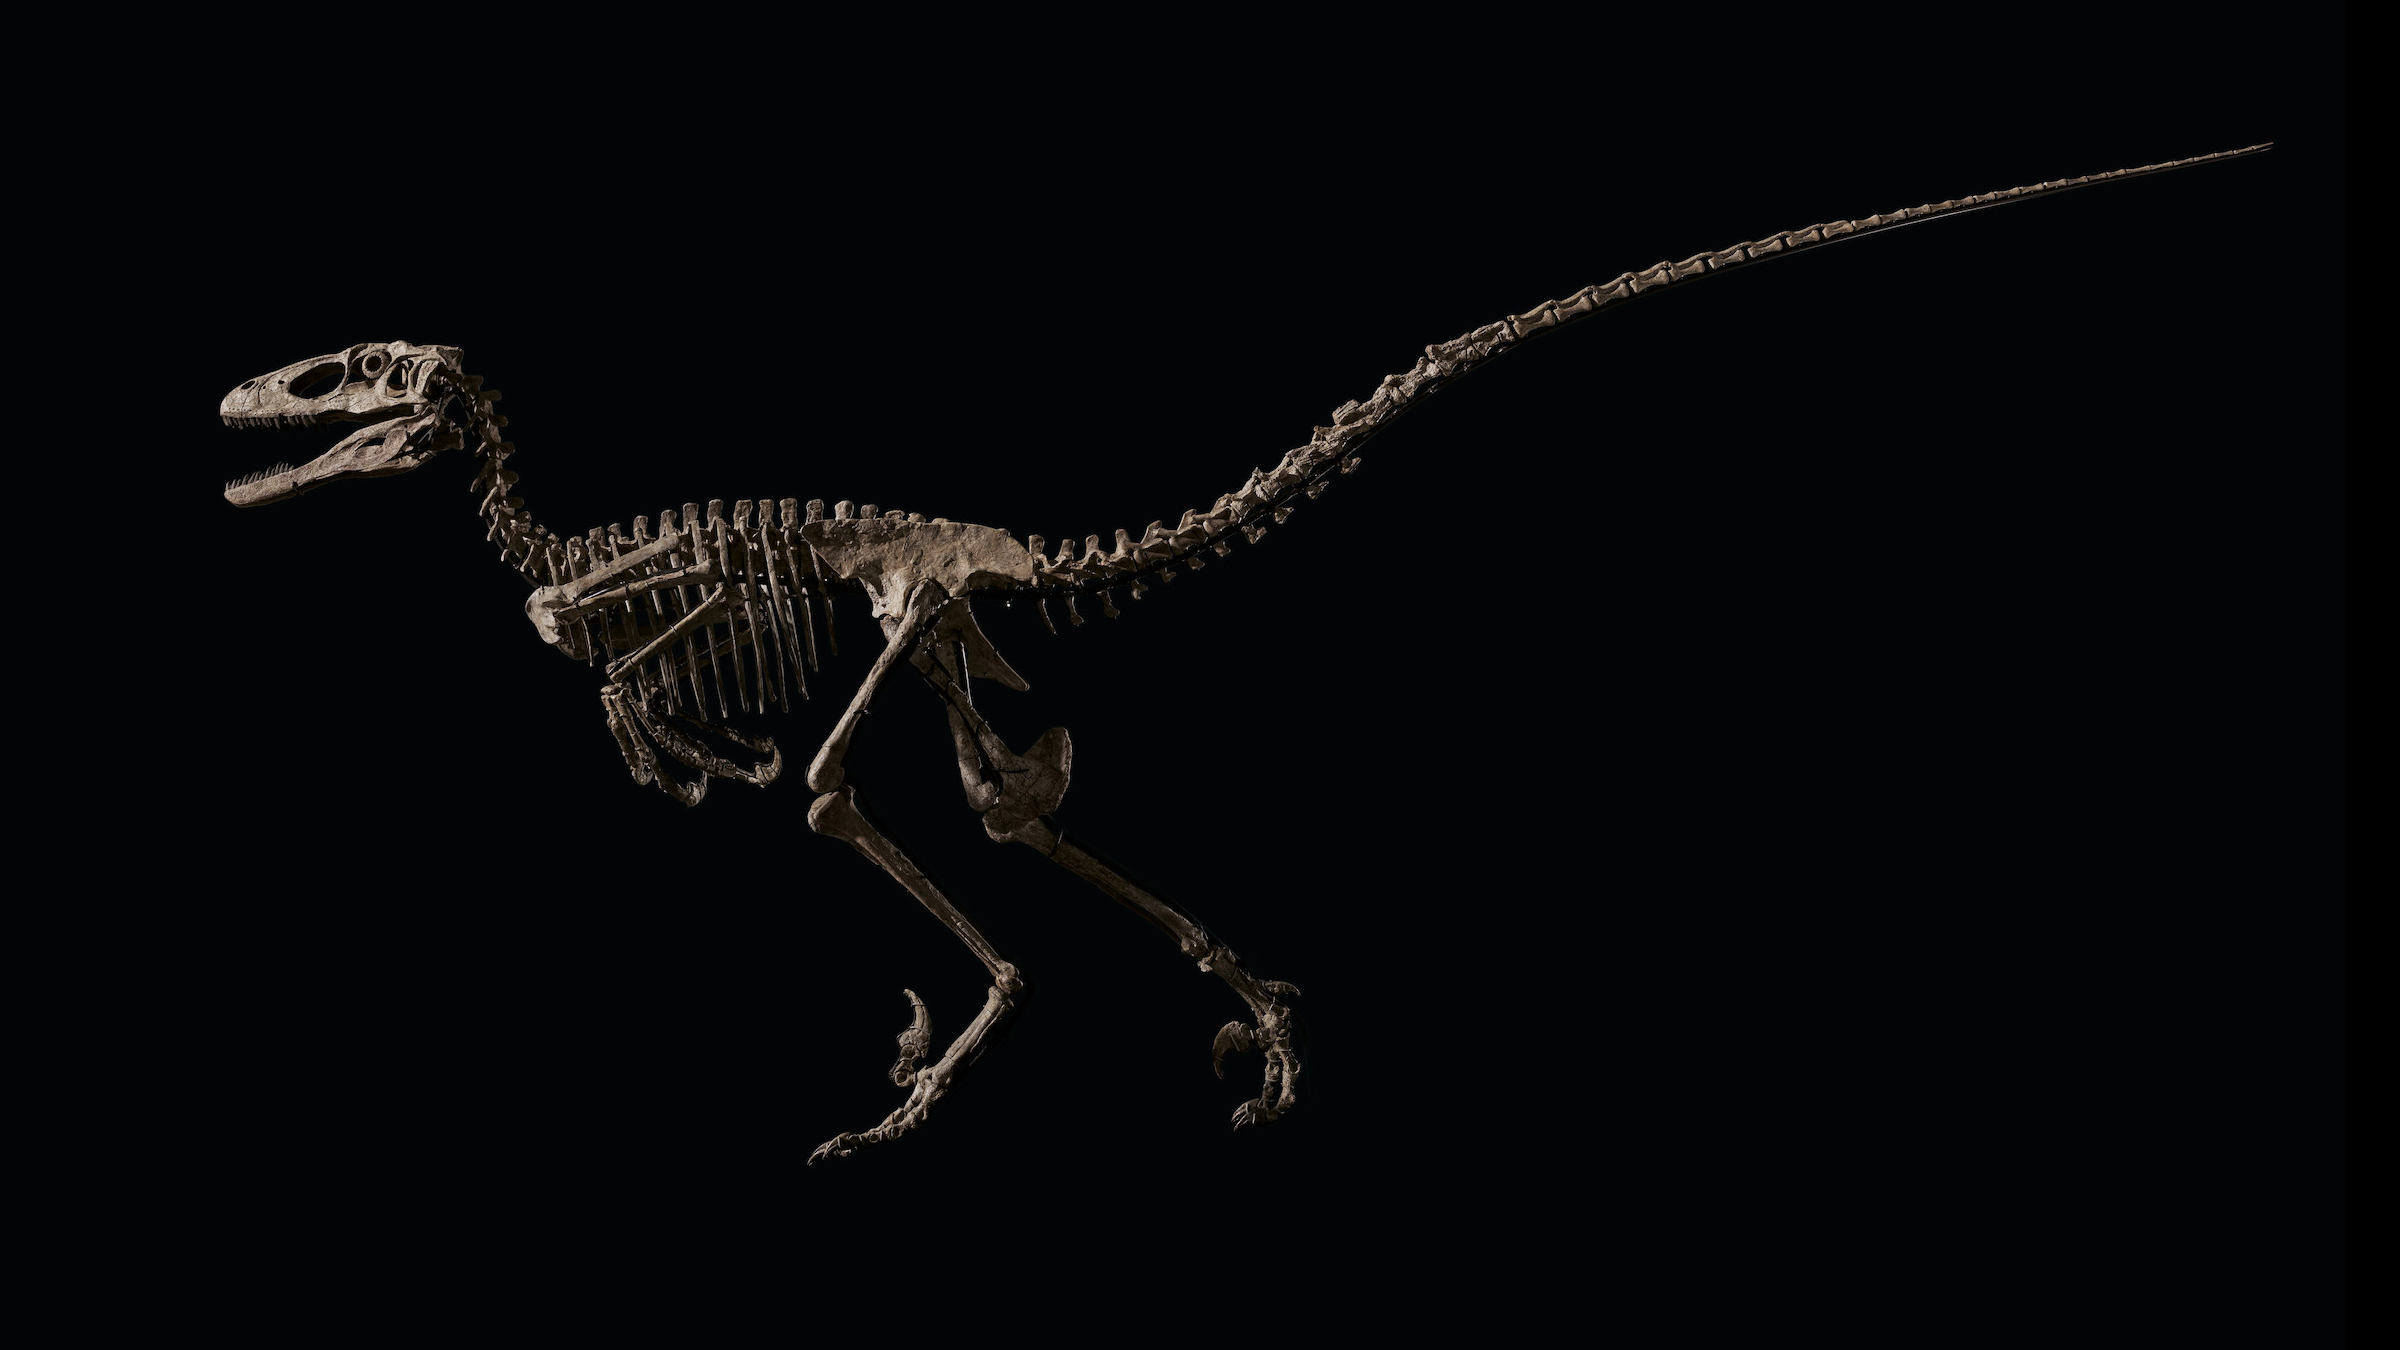 Sold Dinosaur Skeleton That Inspired Velociraptors From Jurassic Park Auctioned For 12 4 Million Live Science